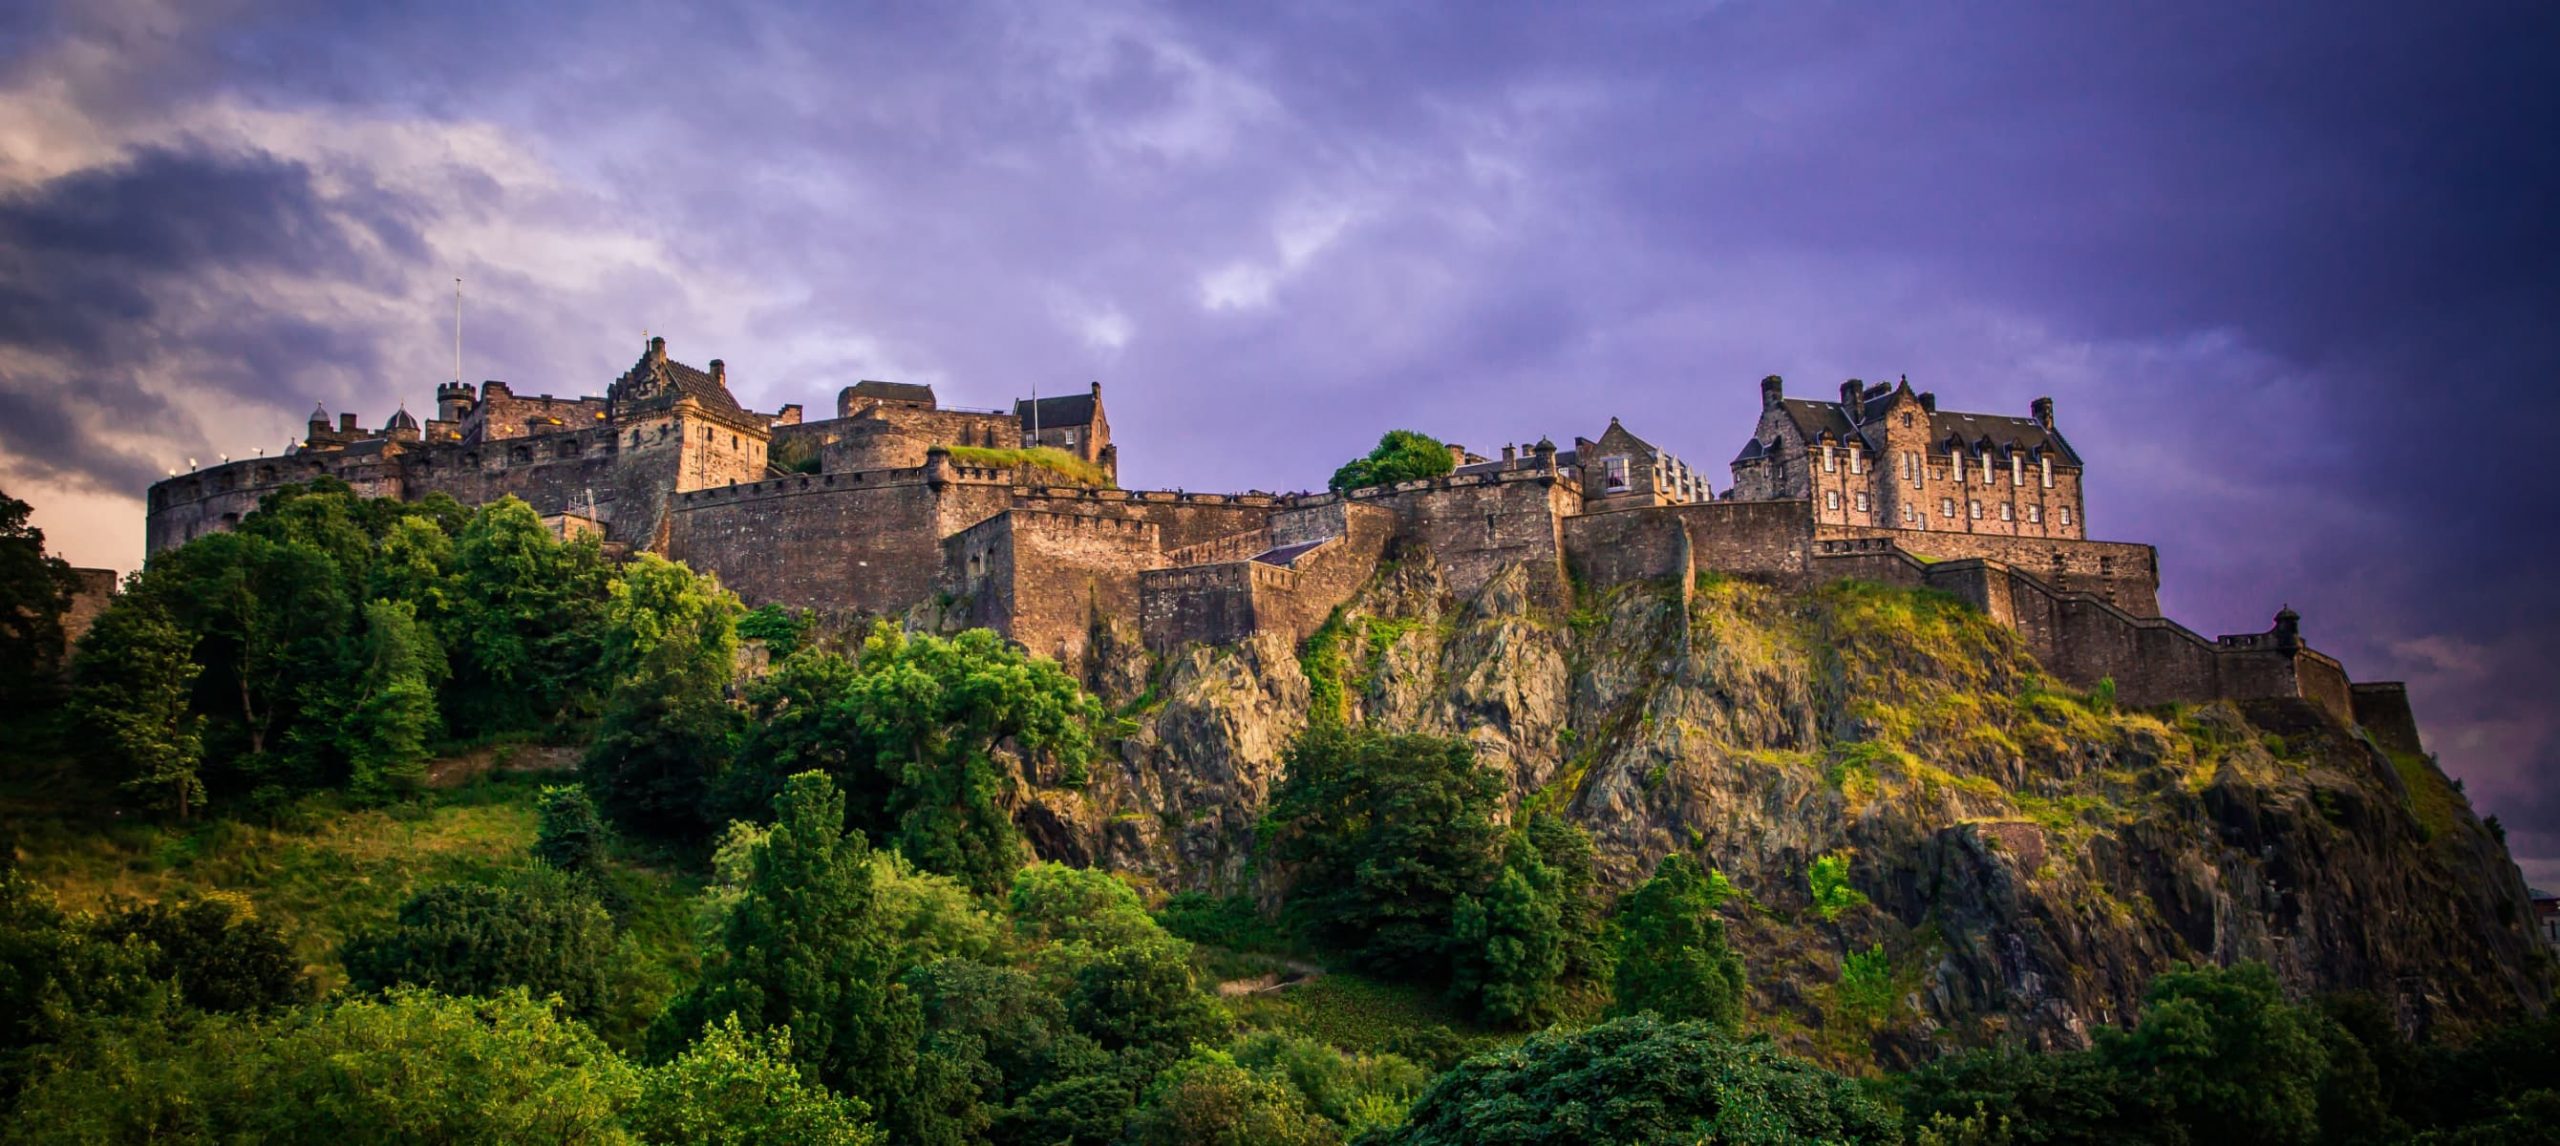 How To Get From Glasgow to Edinburgh: 3 Easy Ways